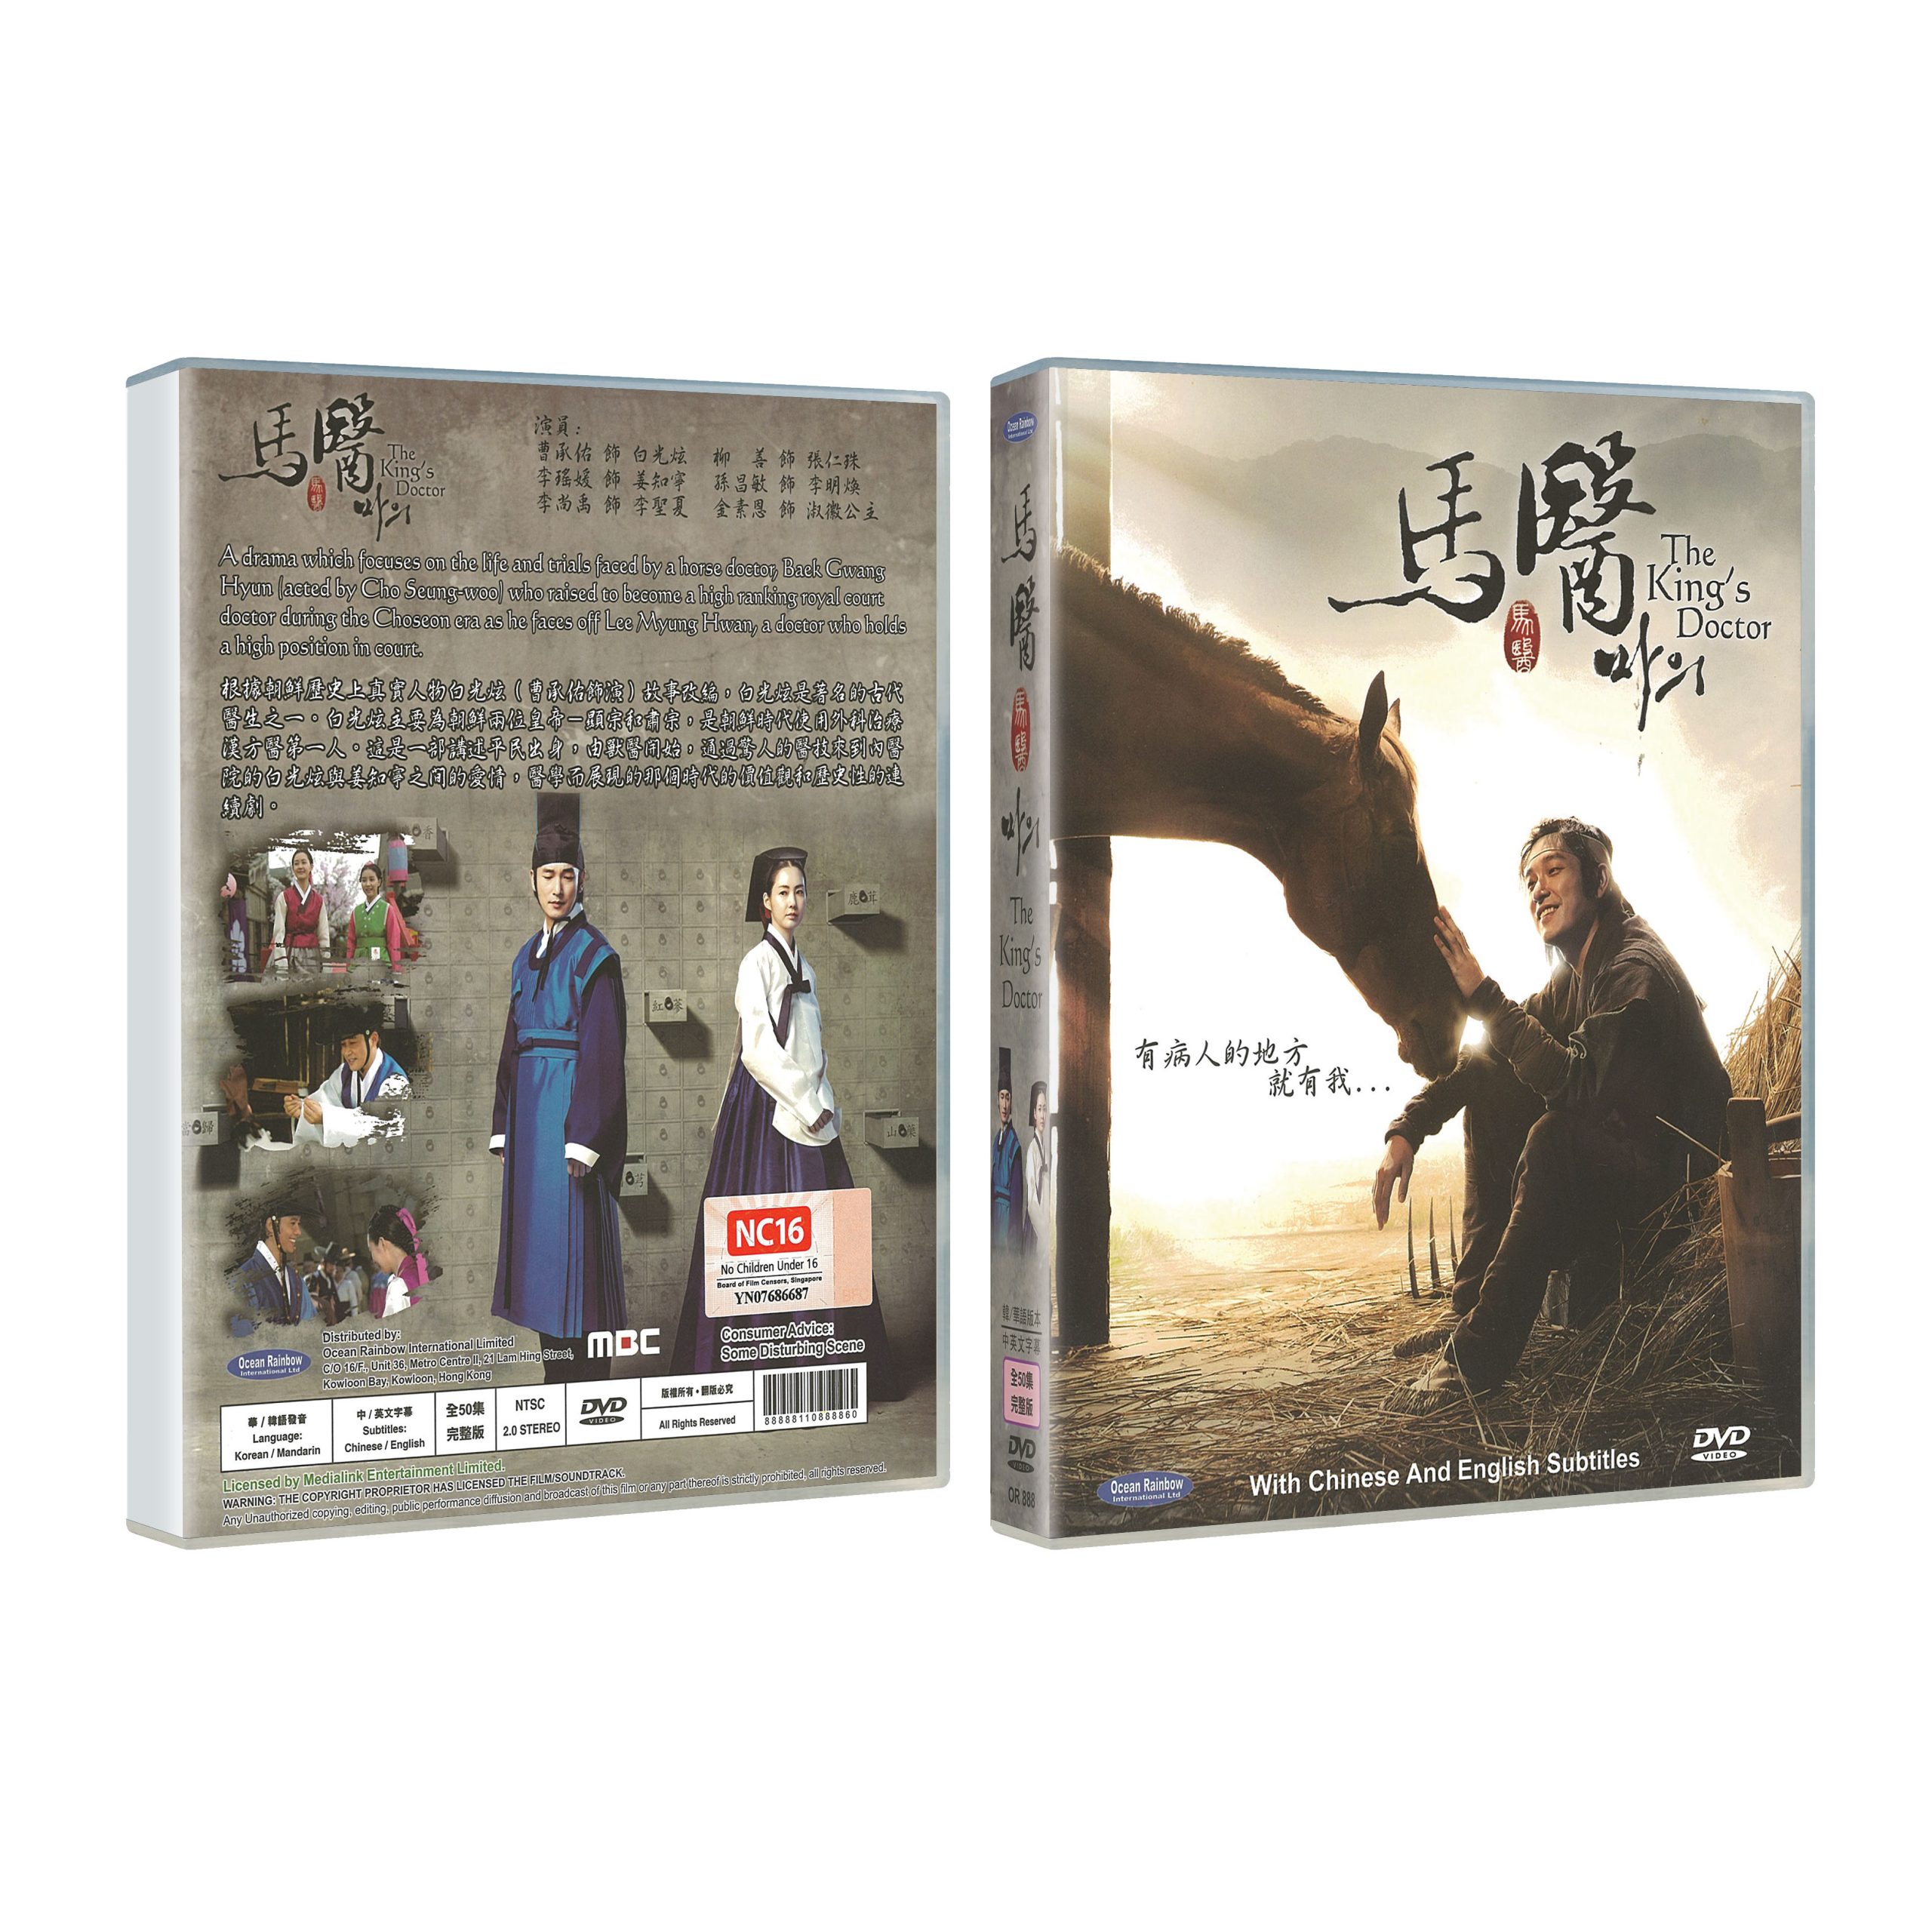 The King's Doctor 馬醫 (Korean Drama DVD)